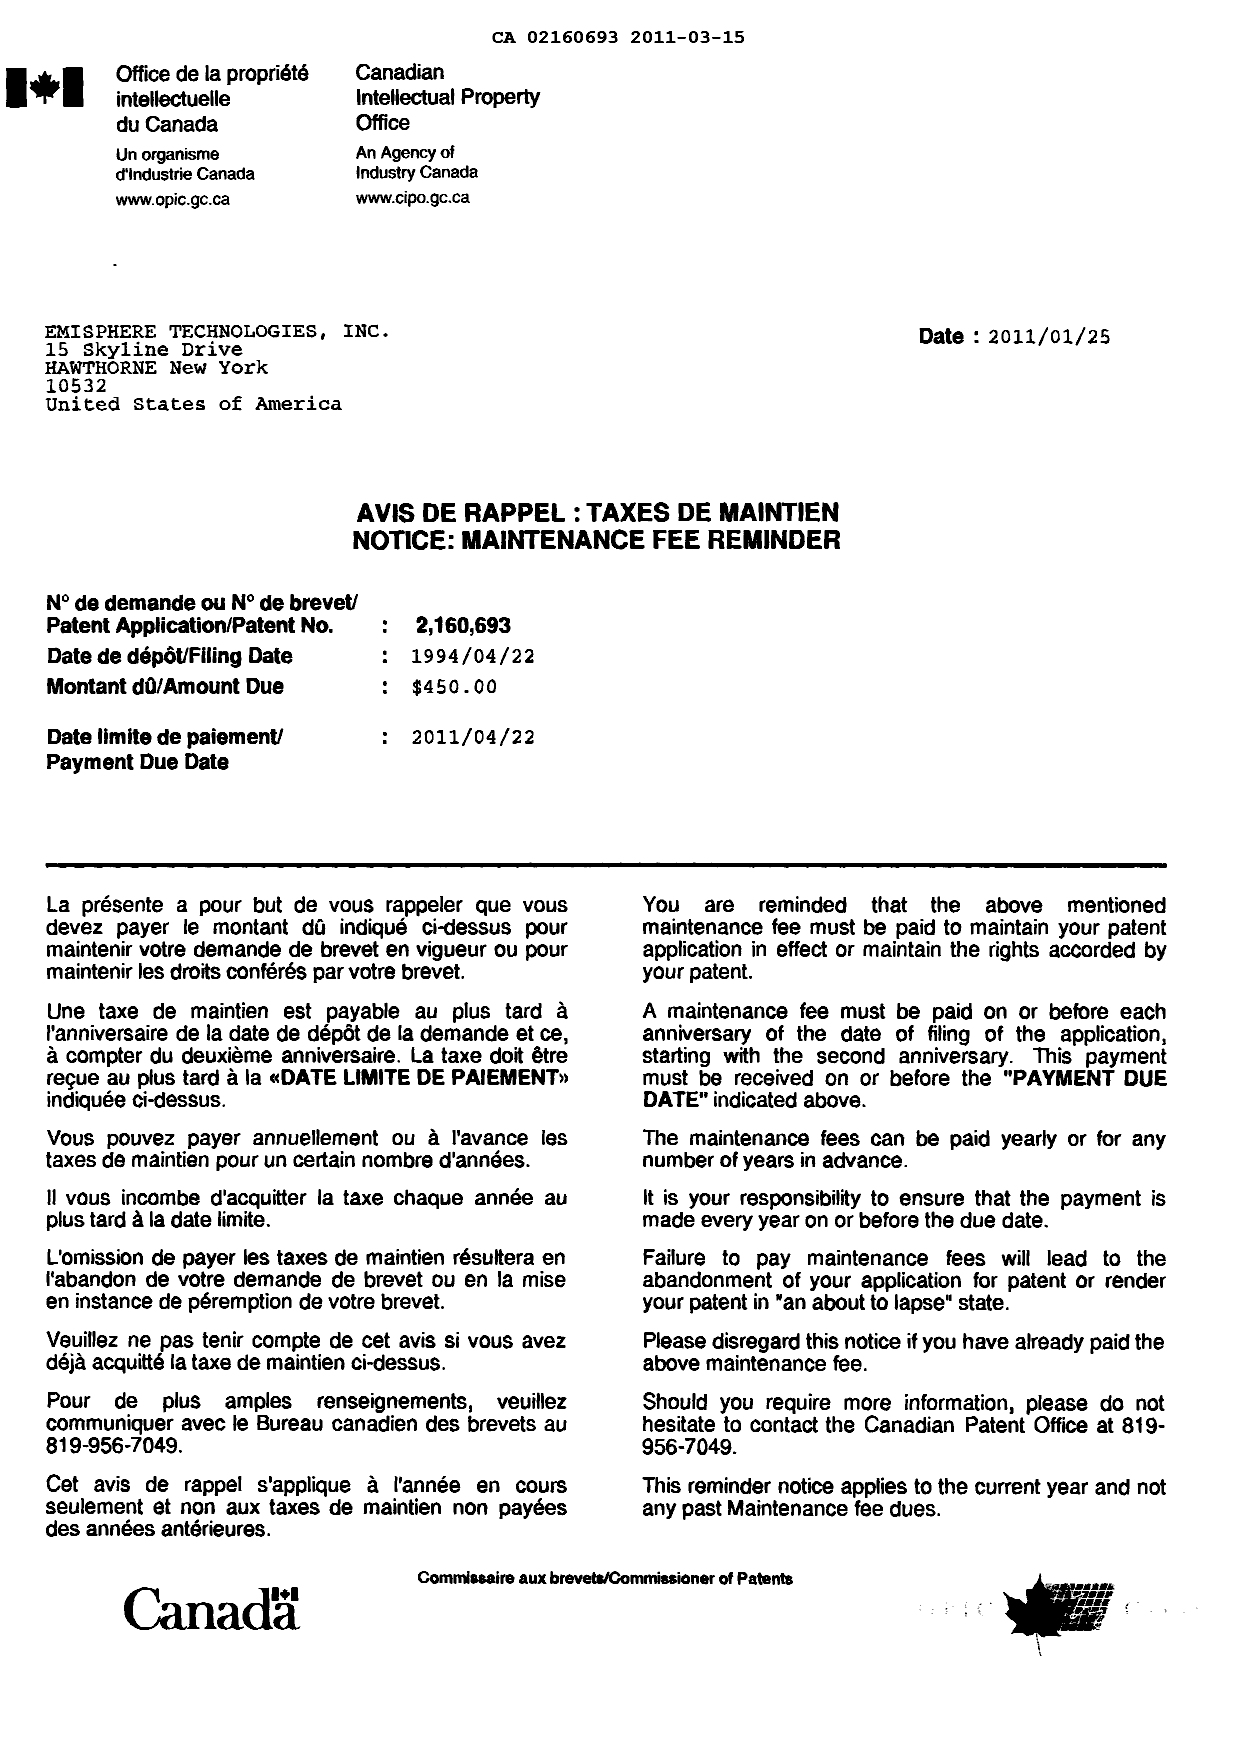 Canadian Patent Document 2160693. Correspondence 20110315. Image 1 of 2